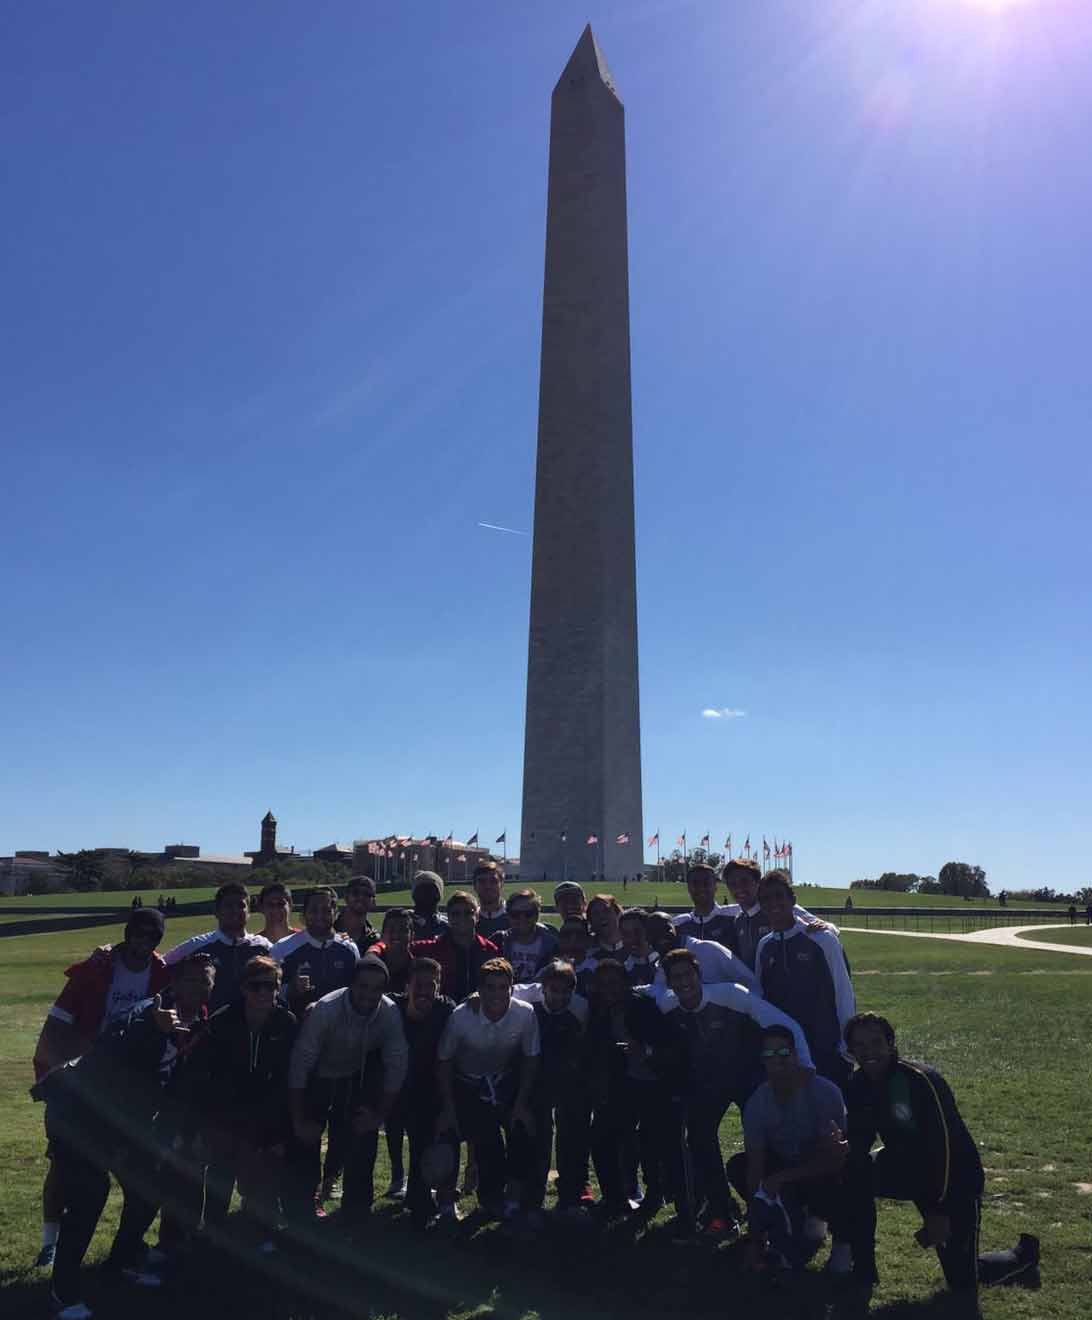 Men's Soccer Team at the Washington monument